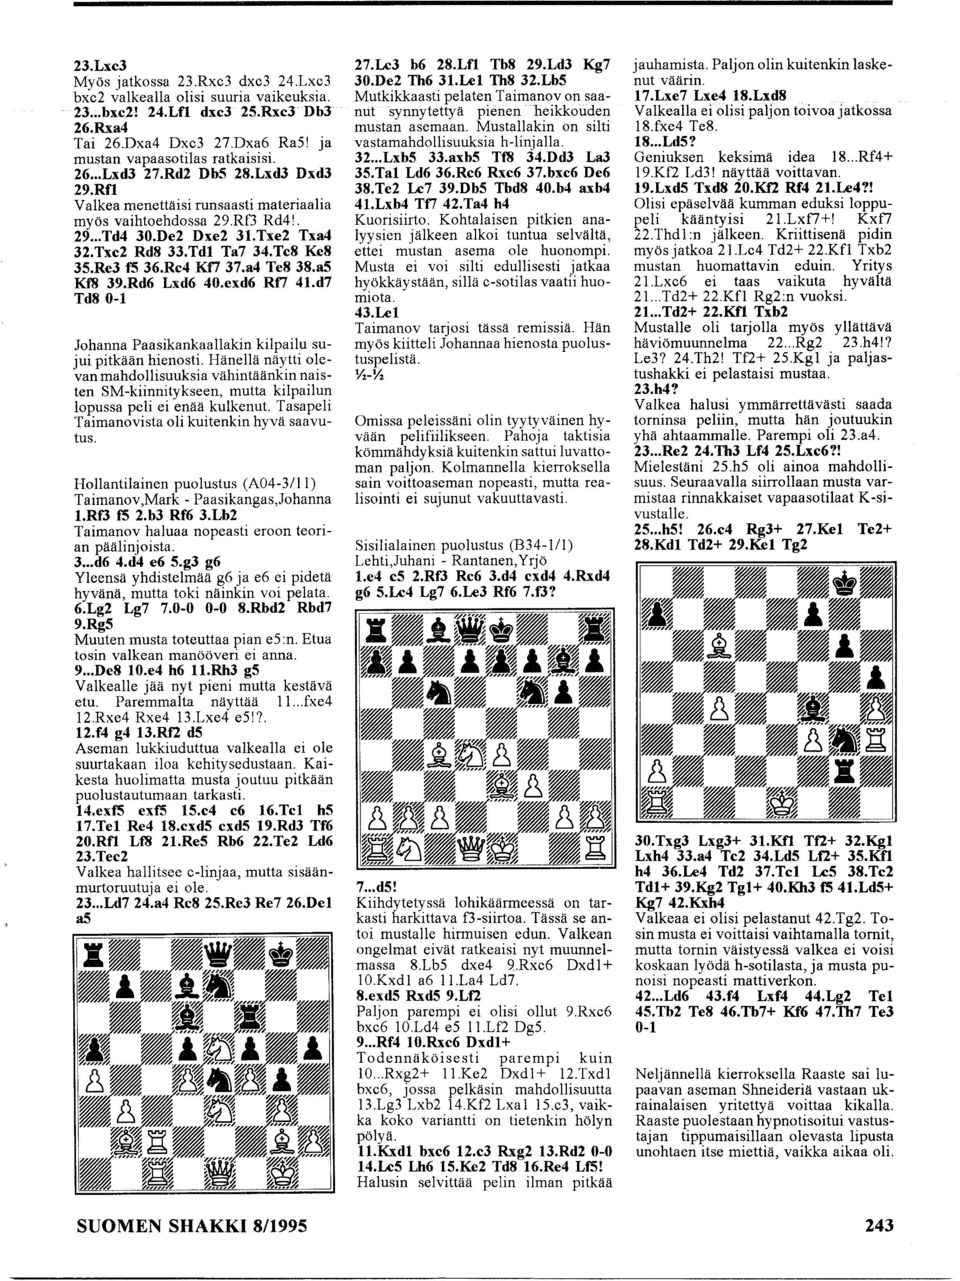 a4 Te8 38.a5 Kf8 39.Rd6 Lxd6 40.exd6 Rf7 41.d7 Td80-1 Johanna Paasikankaallakin kilpailu sujui pitkään hienosti.